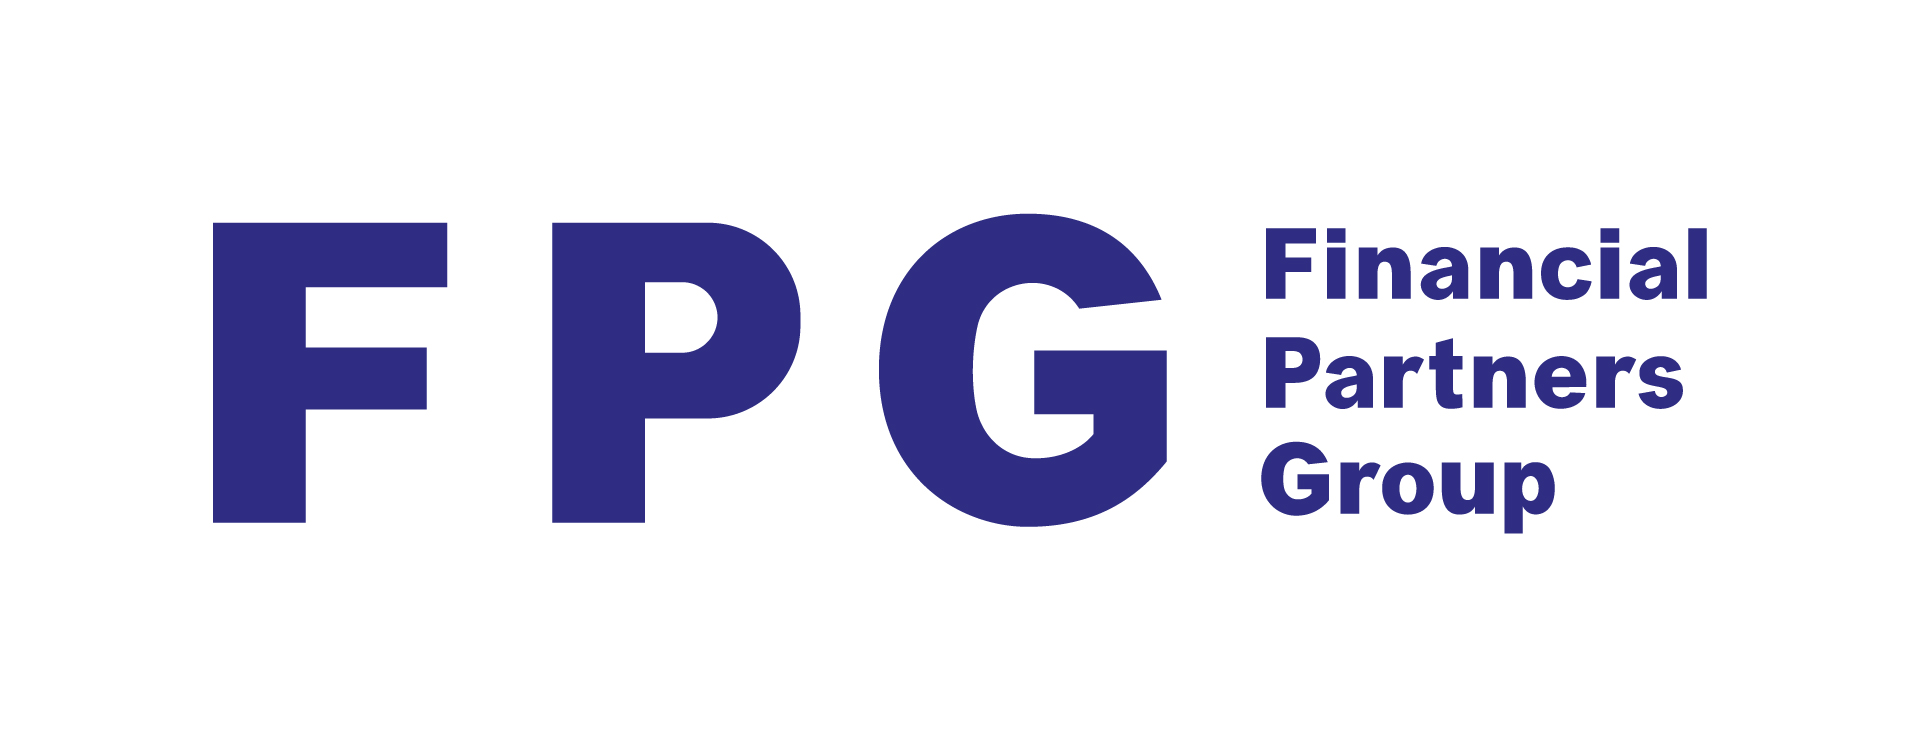 株式会社FPG